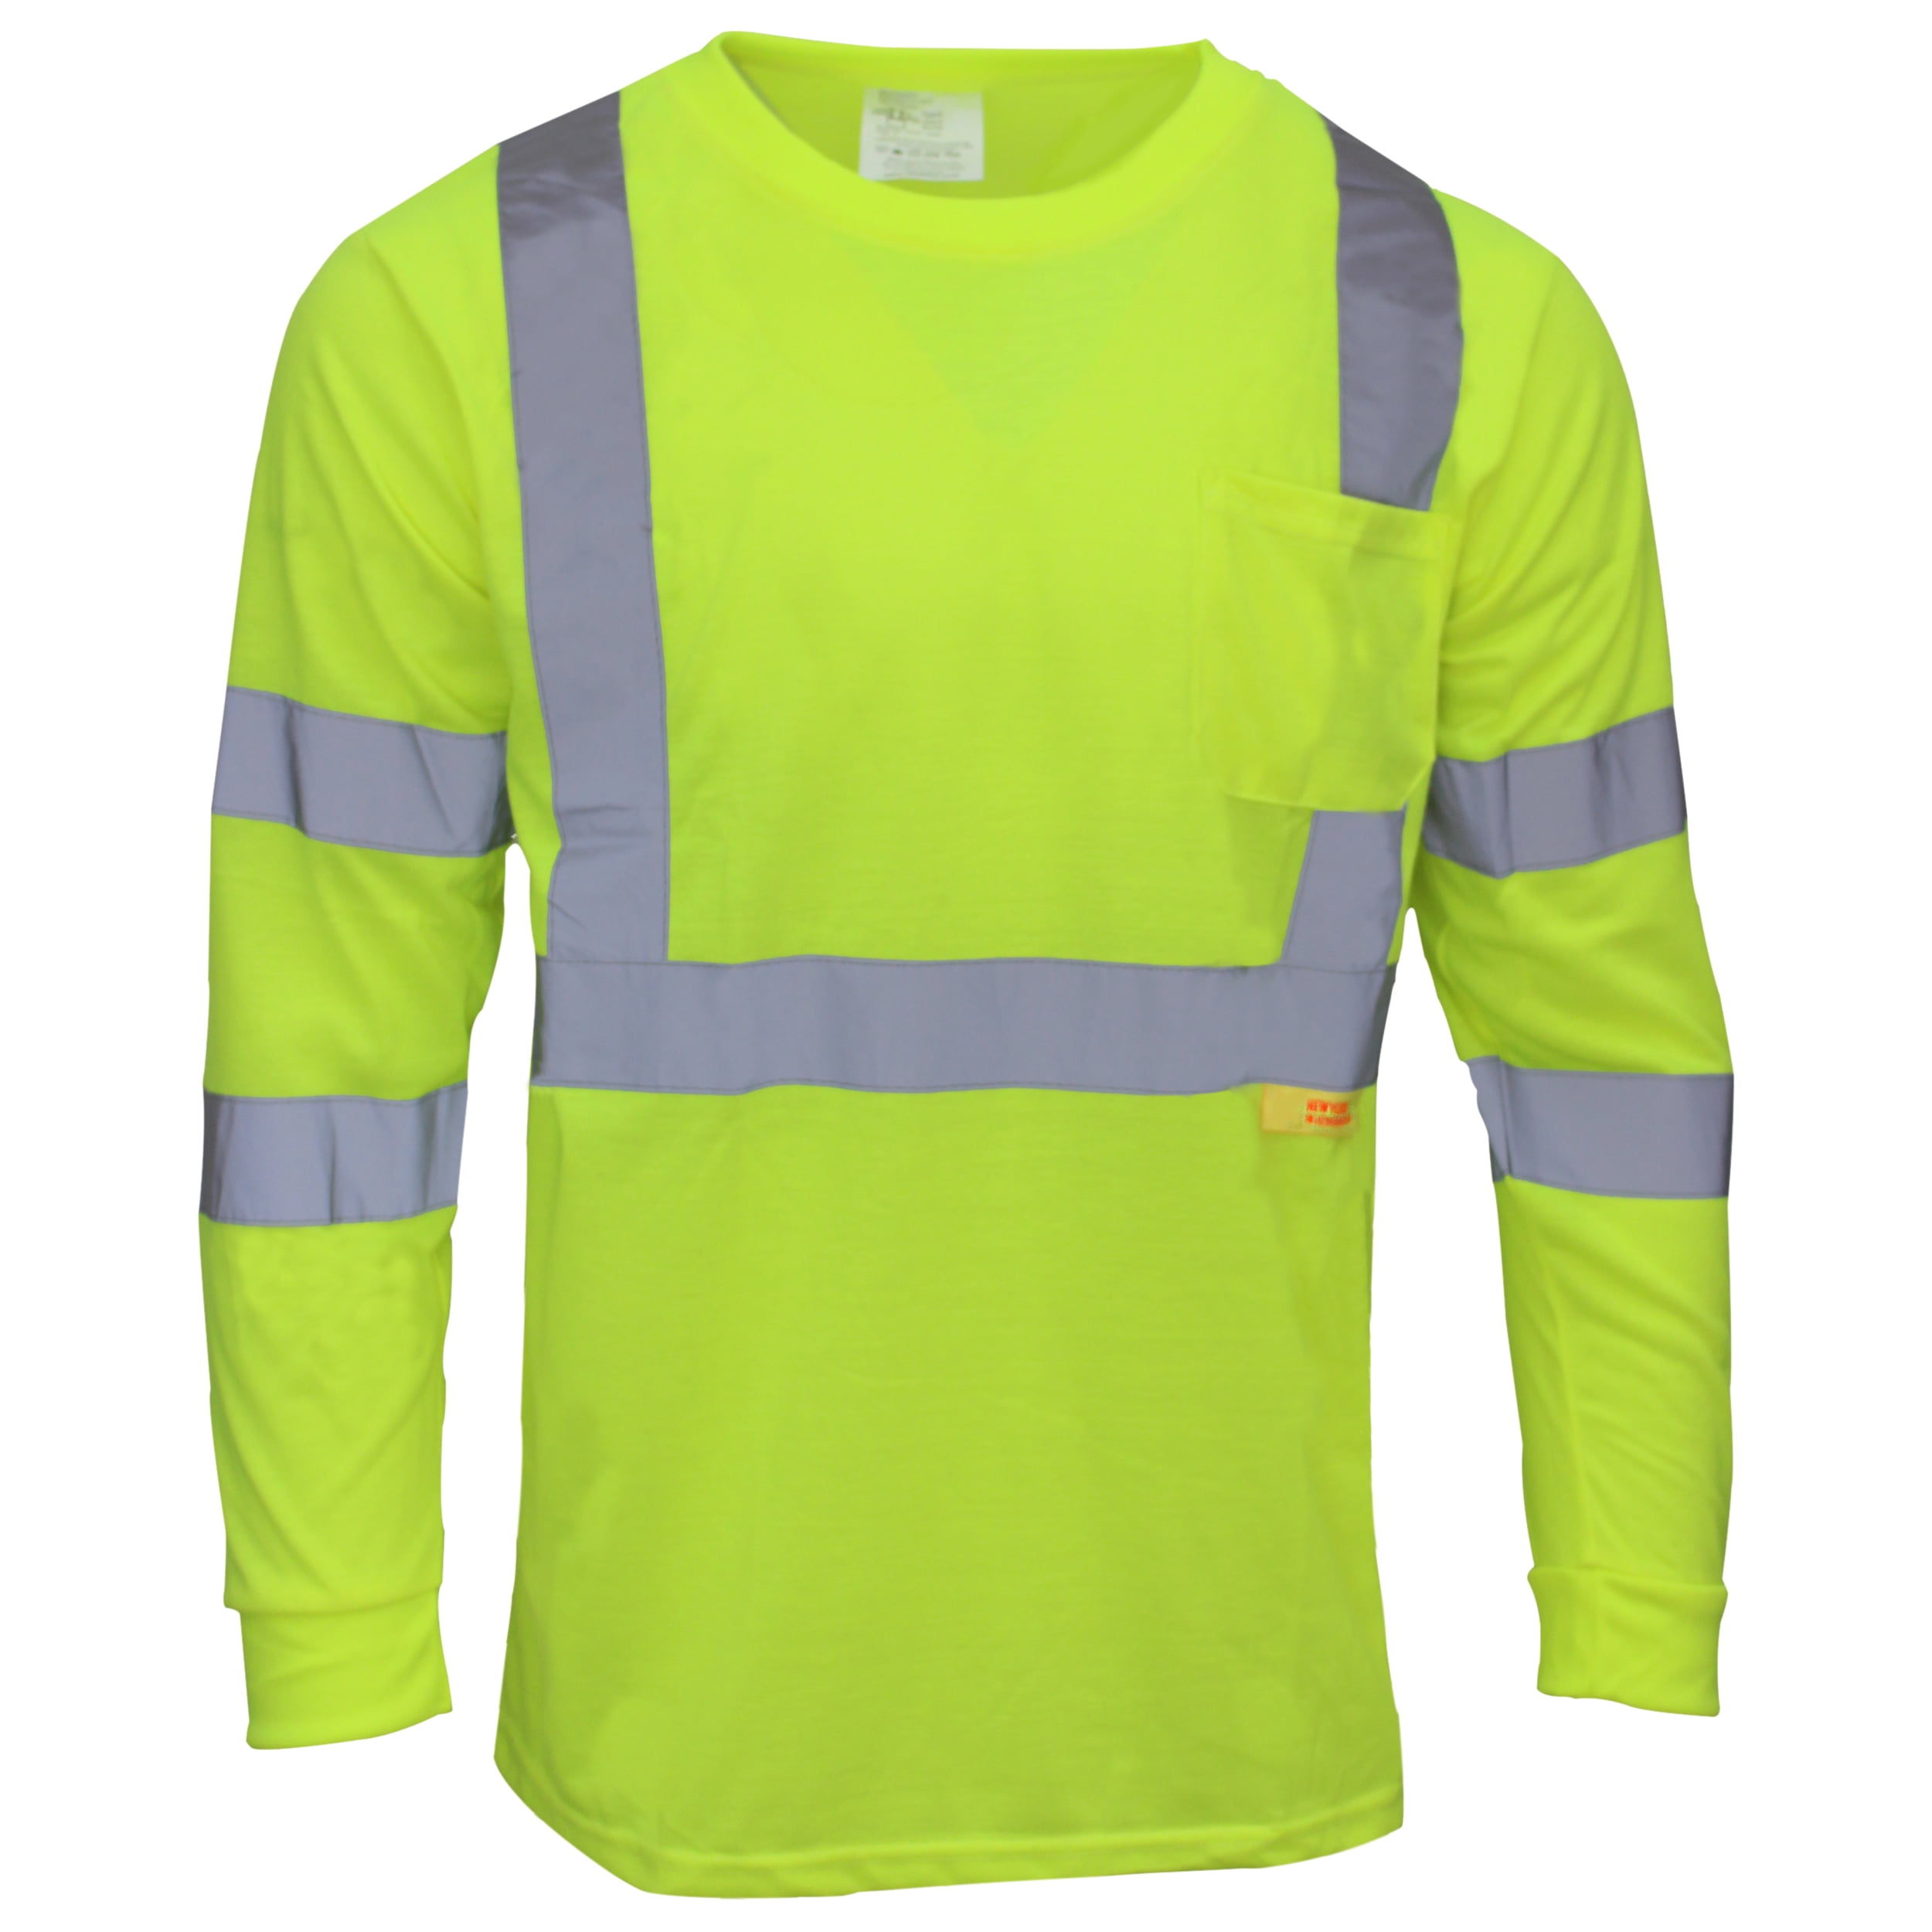 RK Safety - NY Hi-Viz Workwear Class 3 High Vis Reflective Long Sleeve ...